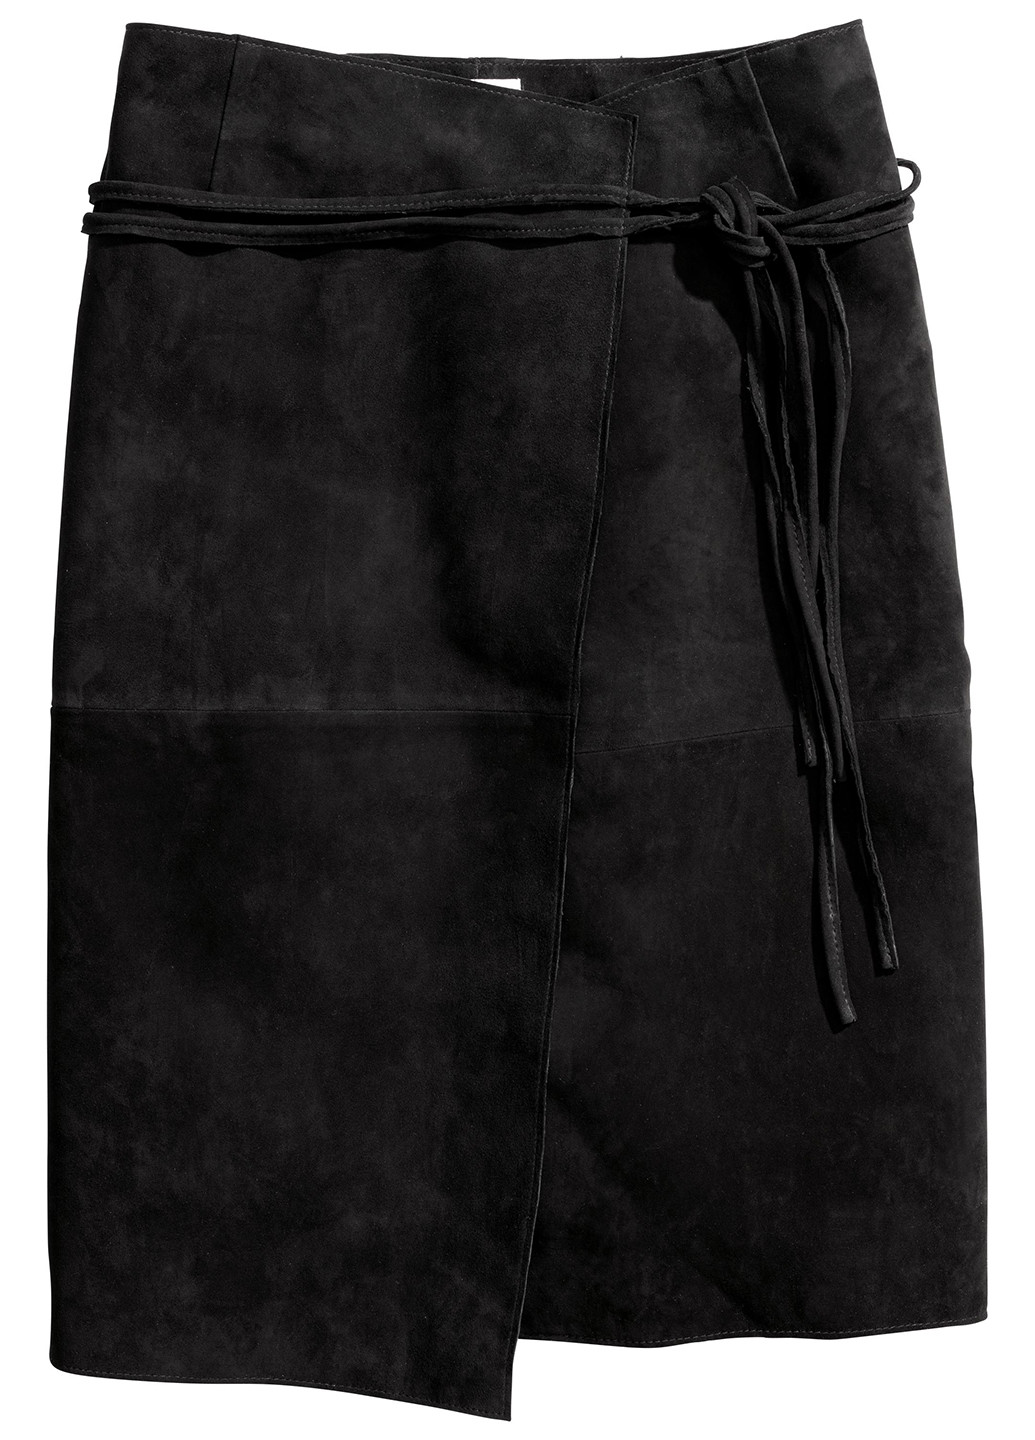 Черная кэжуал однотонная юбка H&M на запах, карандаш